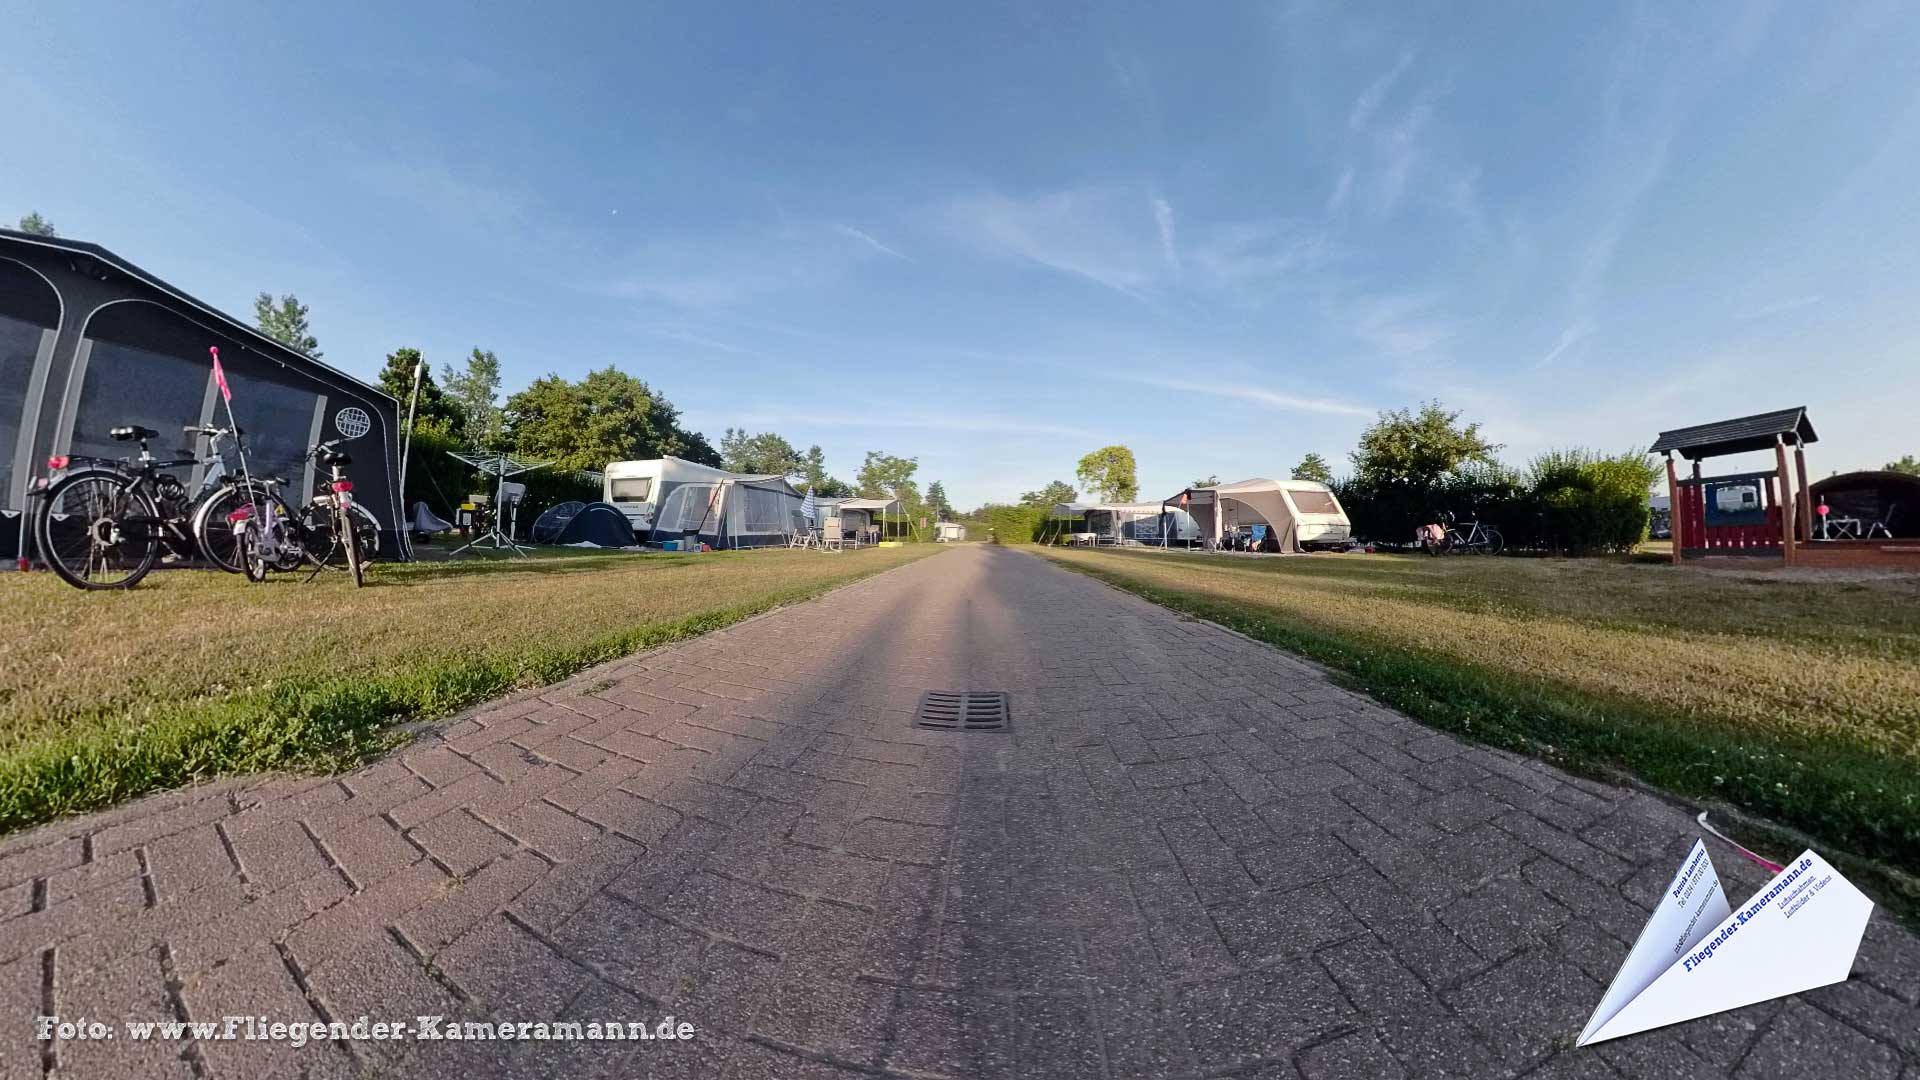 Camping Zeeland in Zeeland (NL) - 360°-Panorama